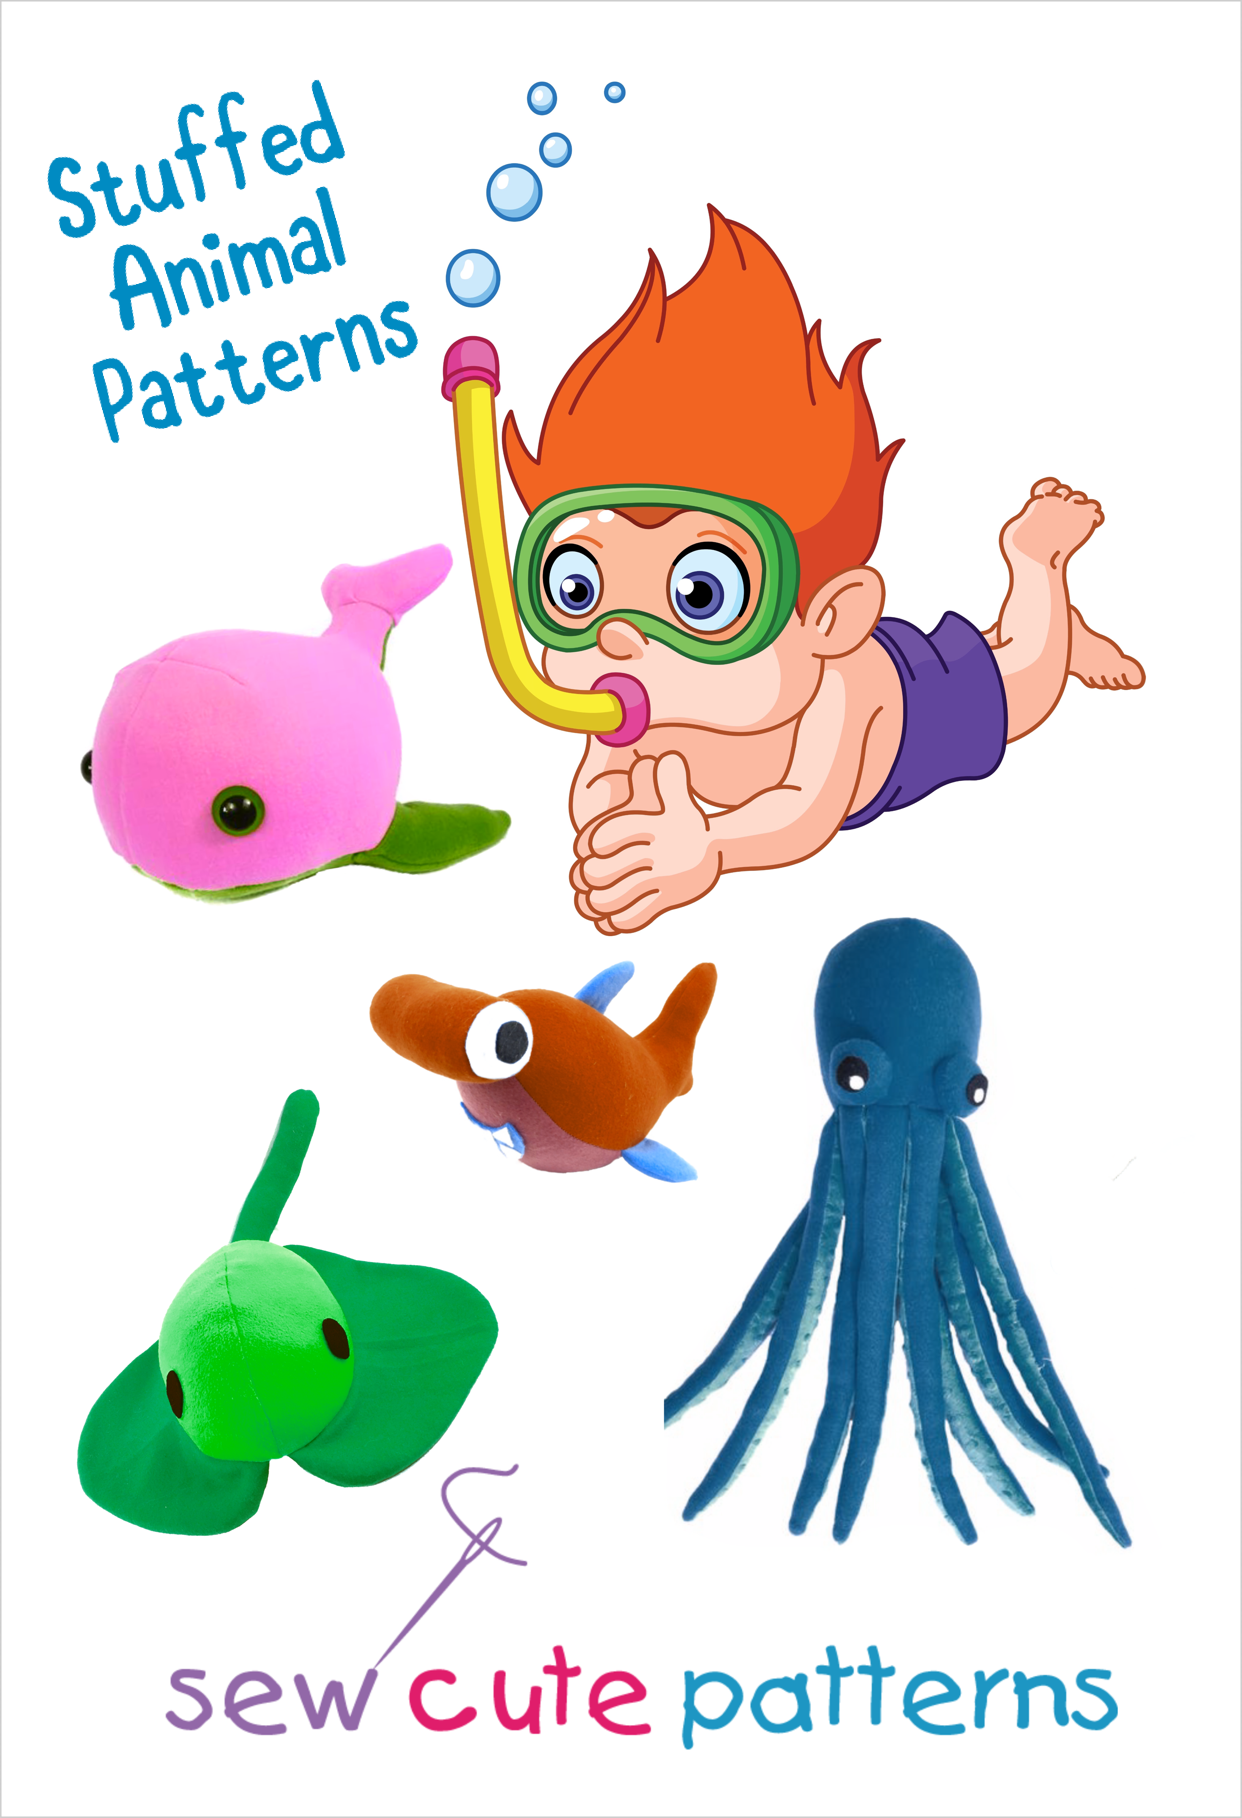 stuffed animal patterns (2) - Copy.PNG